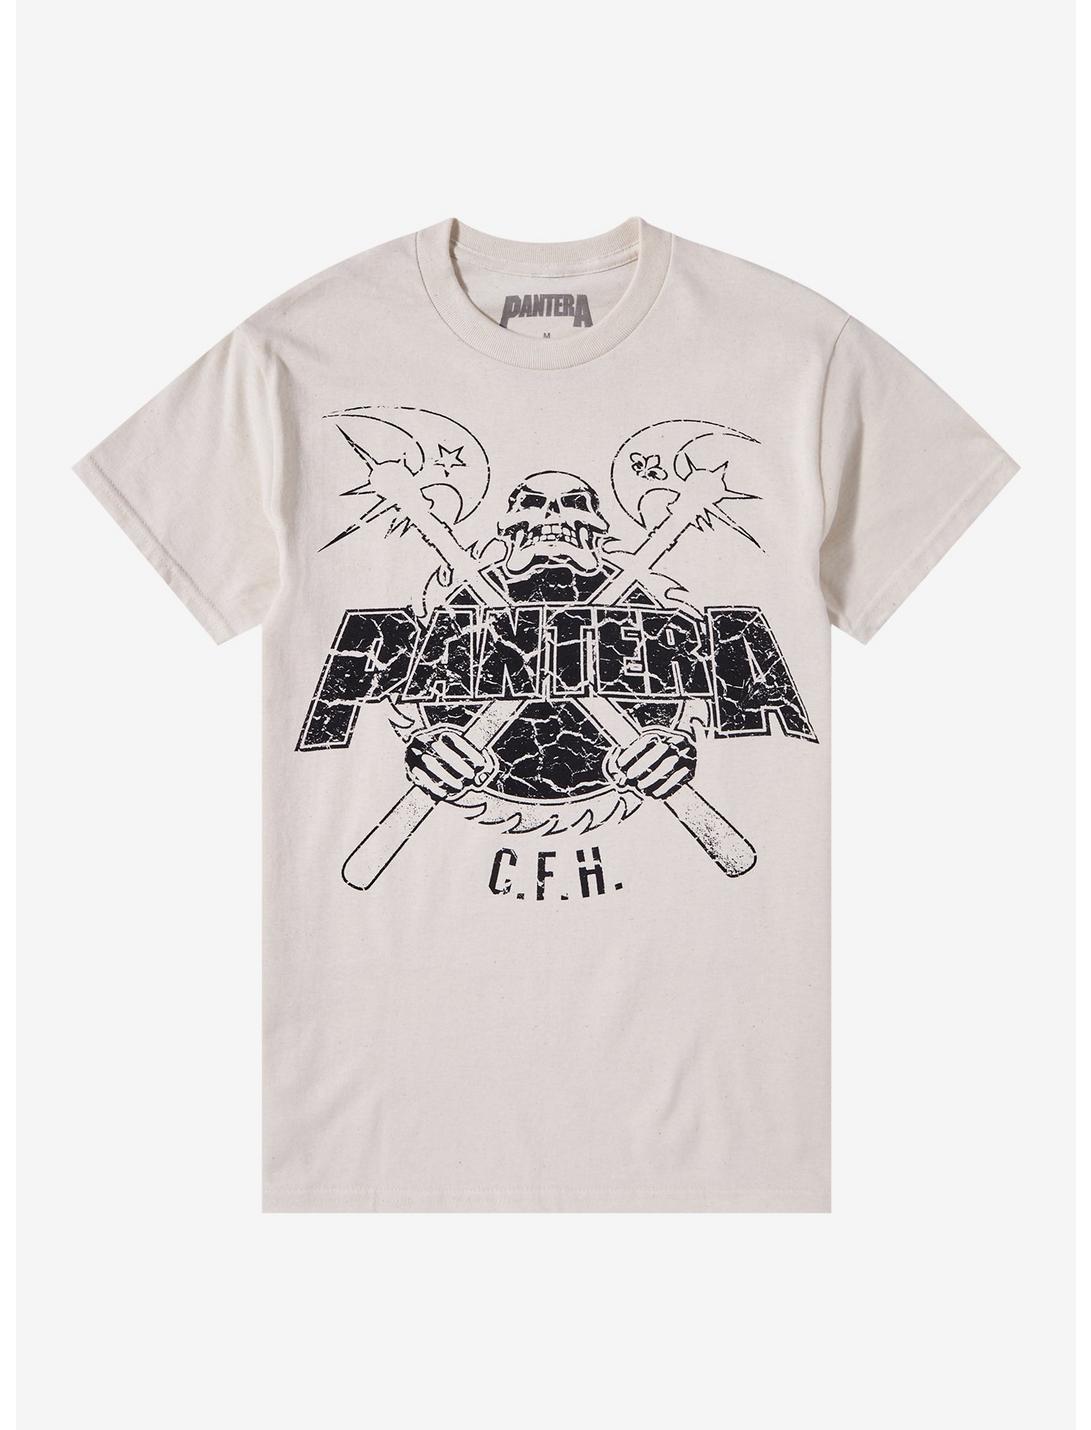 Pantera Cowboys From Hell Line Art Boyfriend Fit Girls T-Shirt, NATURAL, hi-res